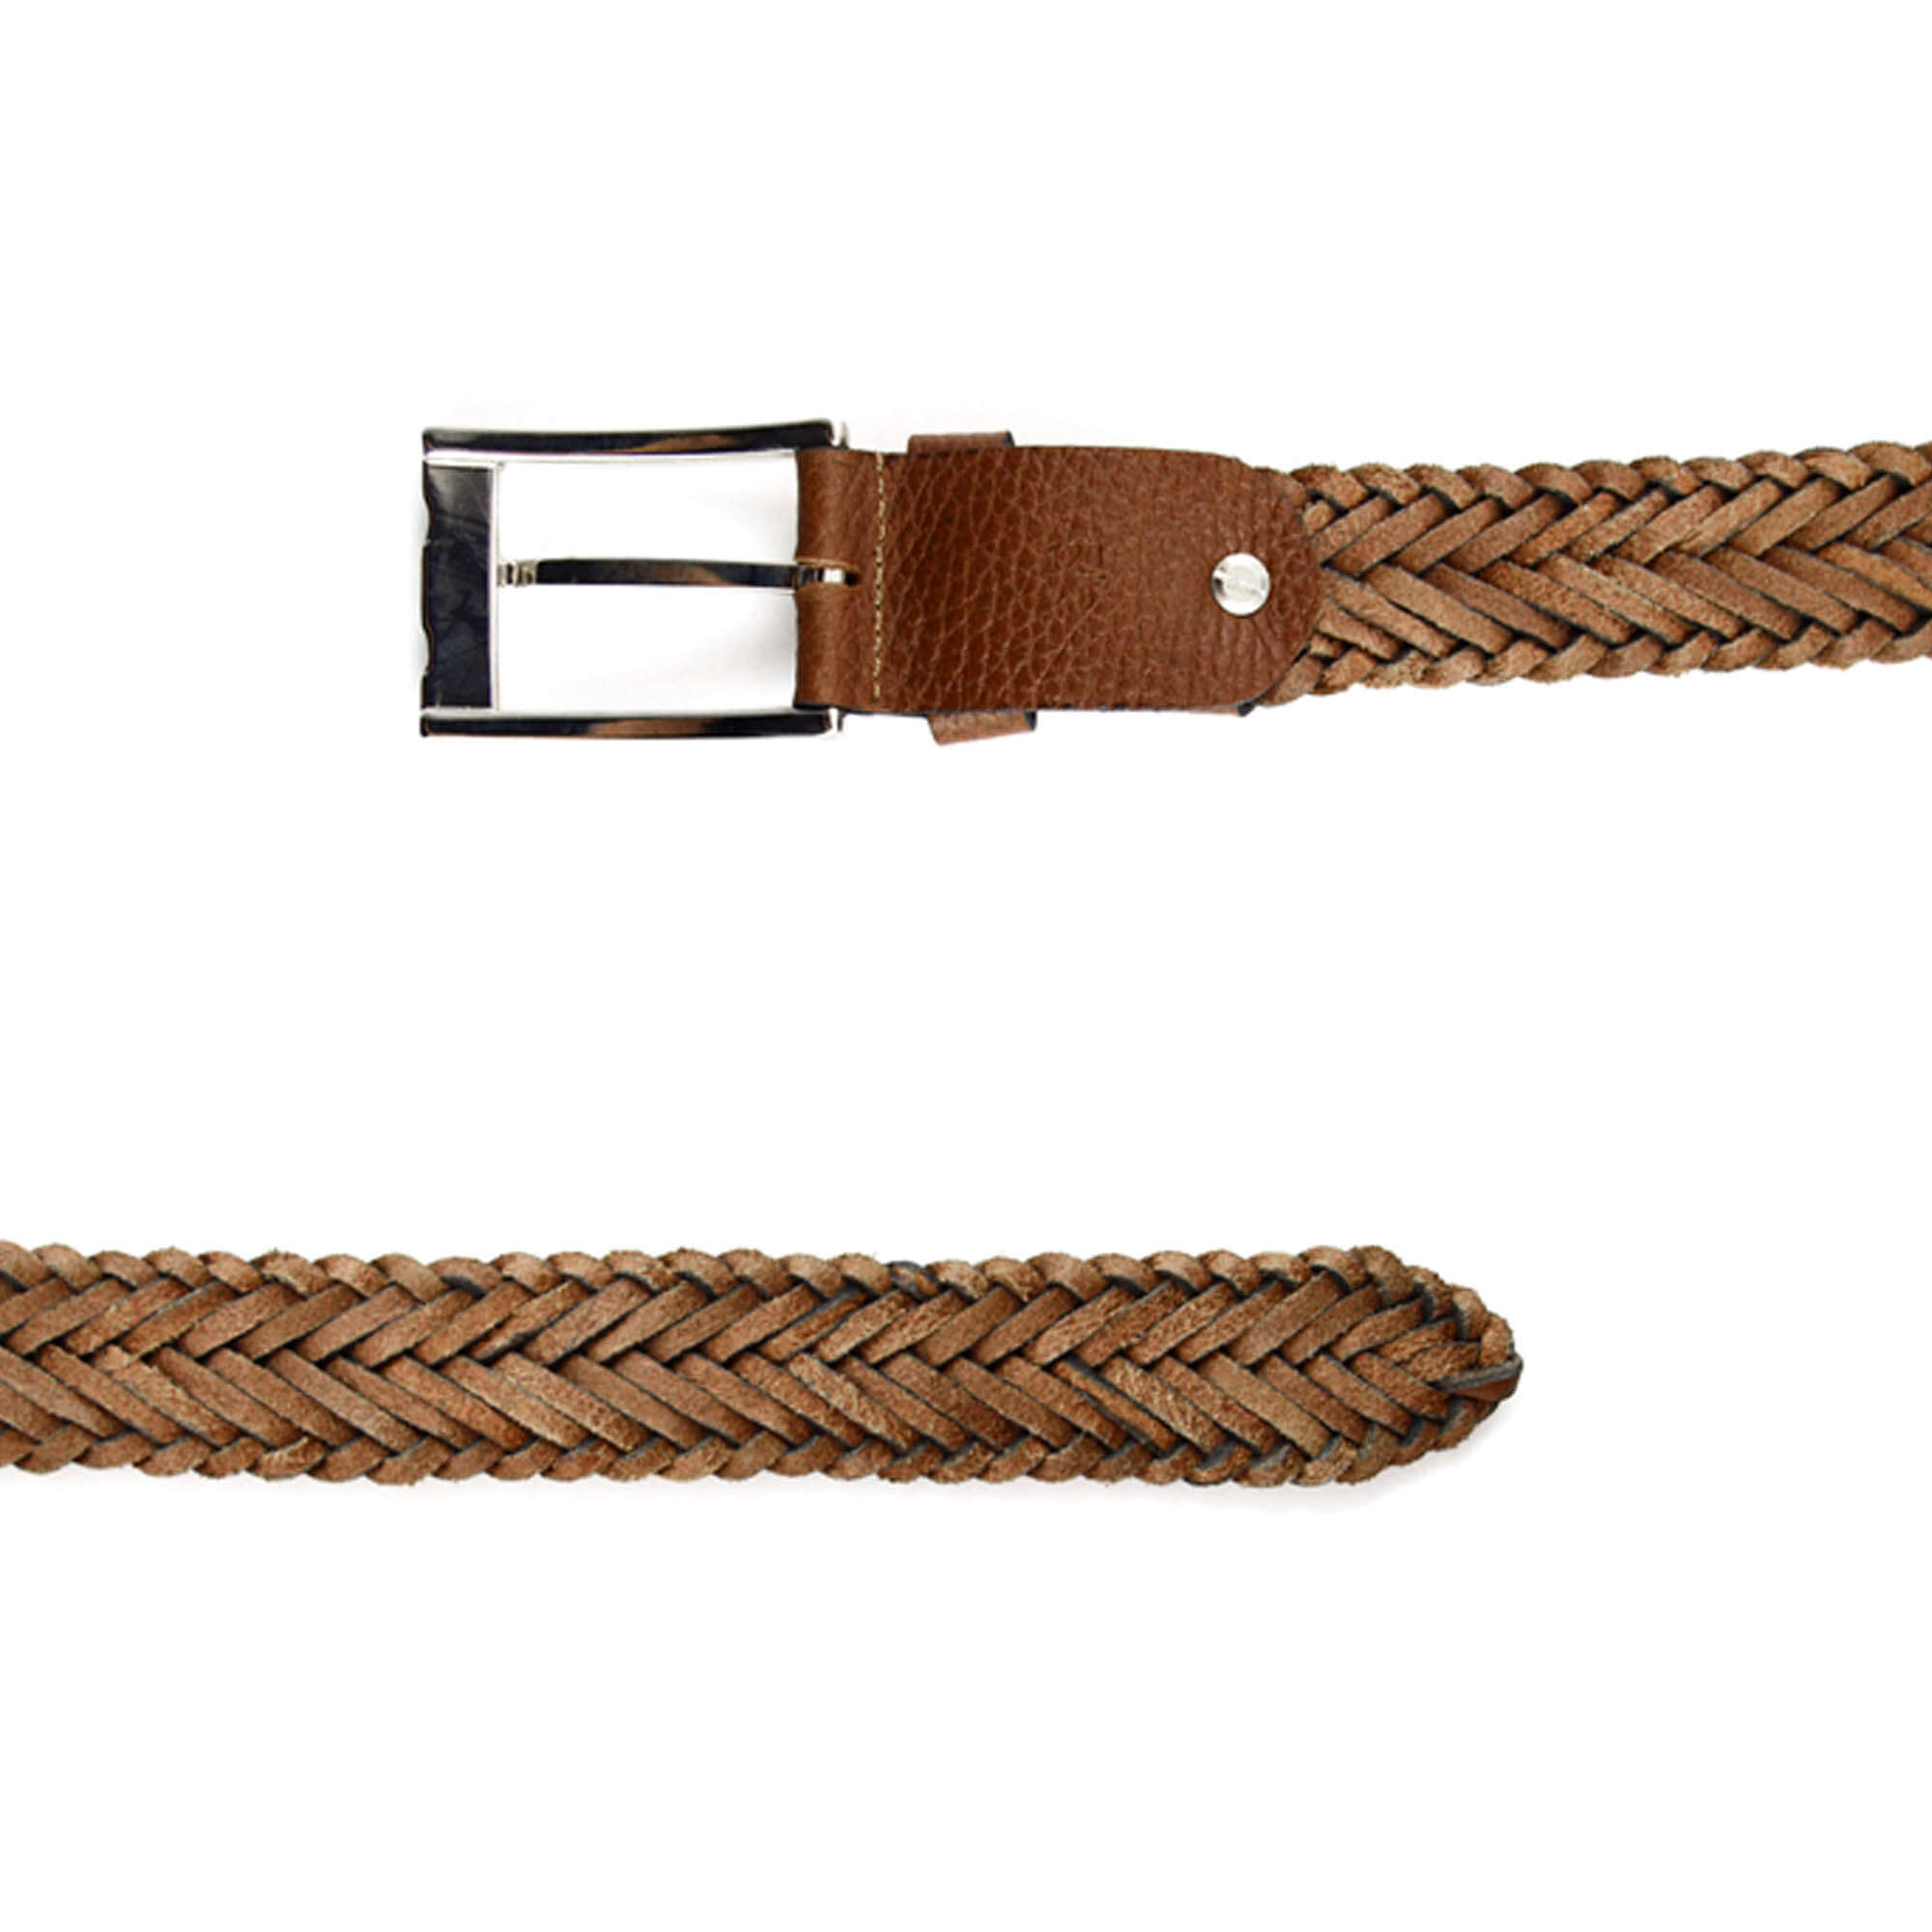 Buy Full Grain Leather Men's Belt - Woven Tan Brown